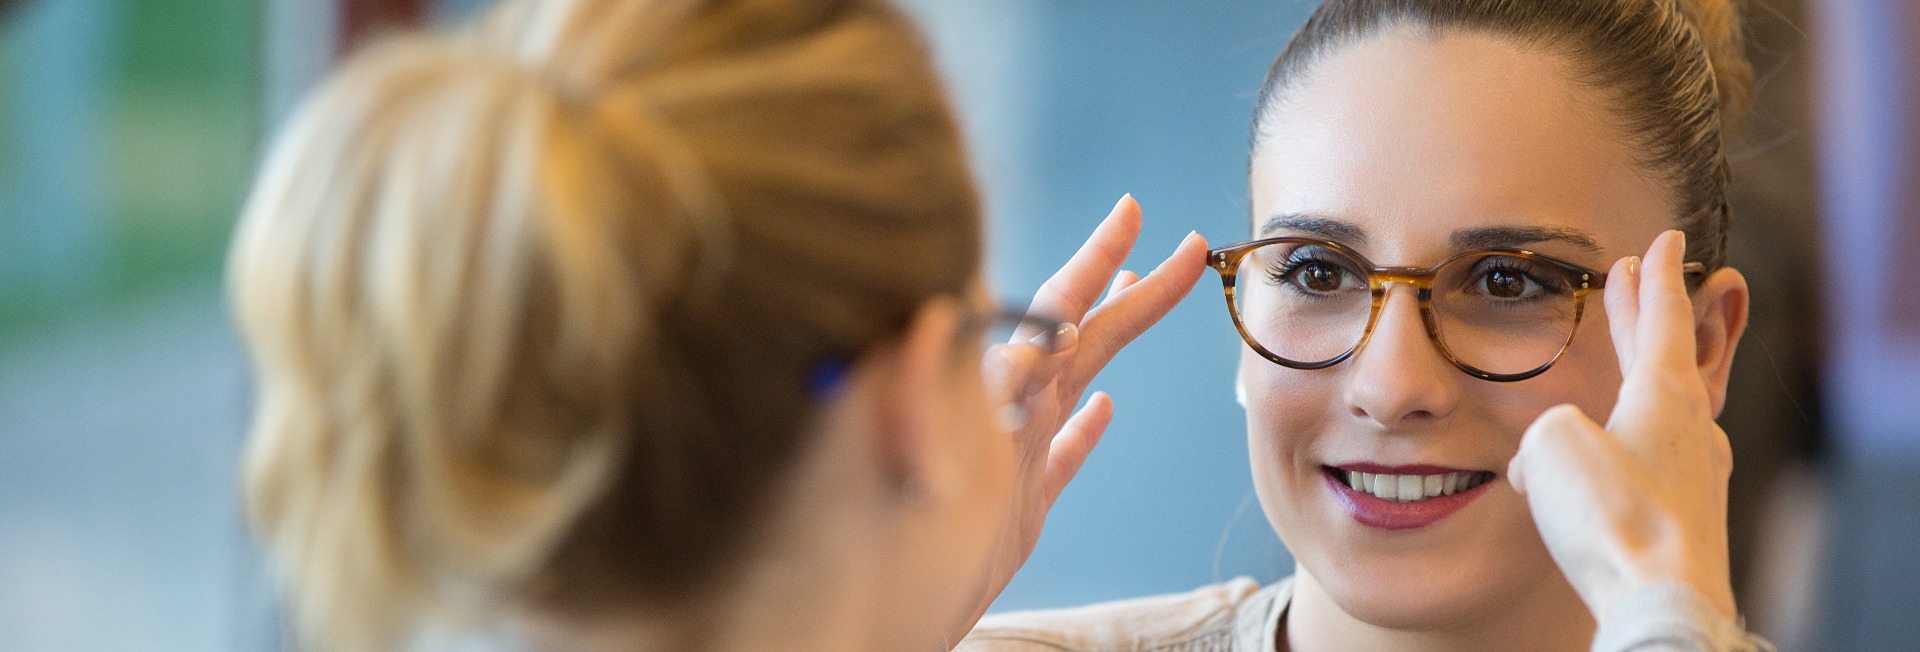 Salesgirl Assisting Customer To In Wearing Glasses